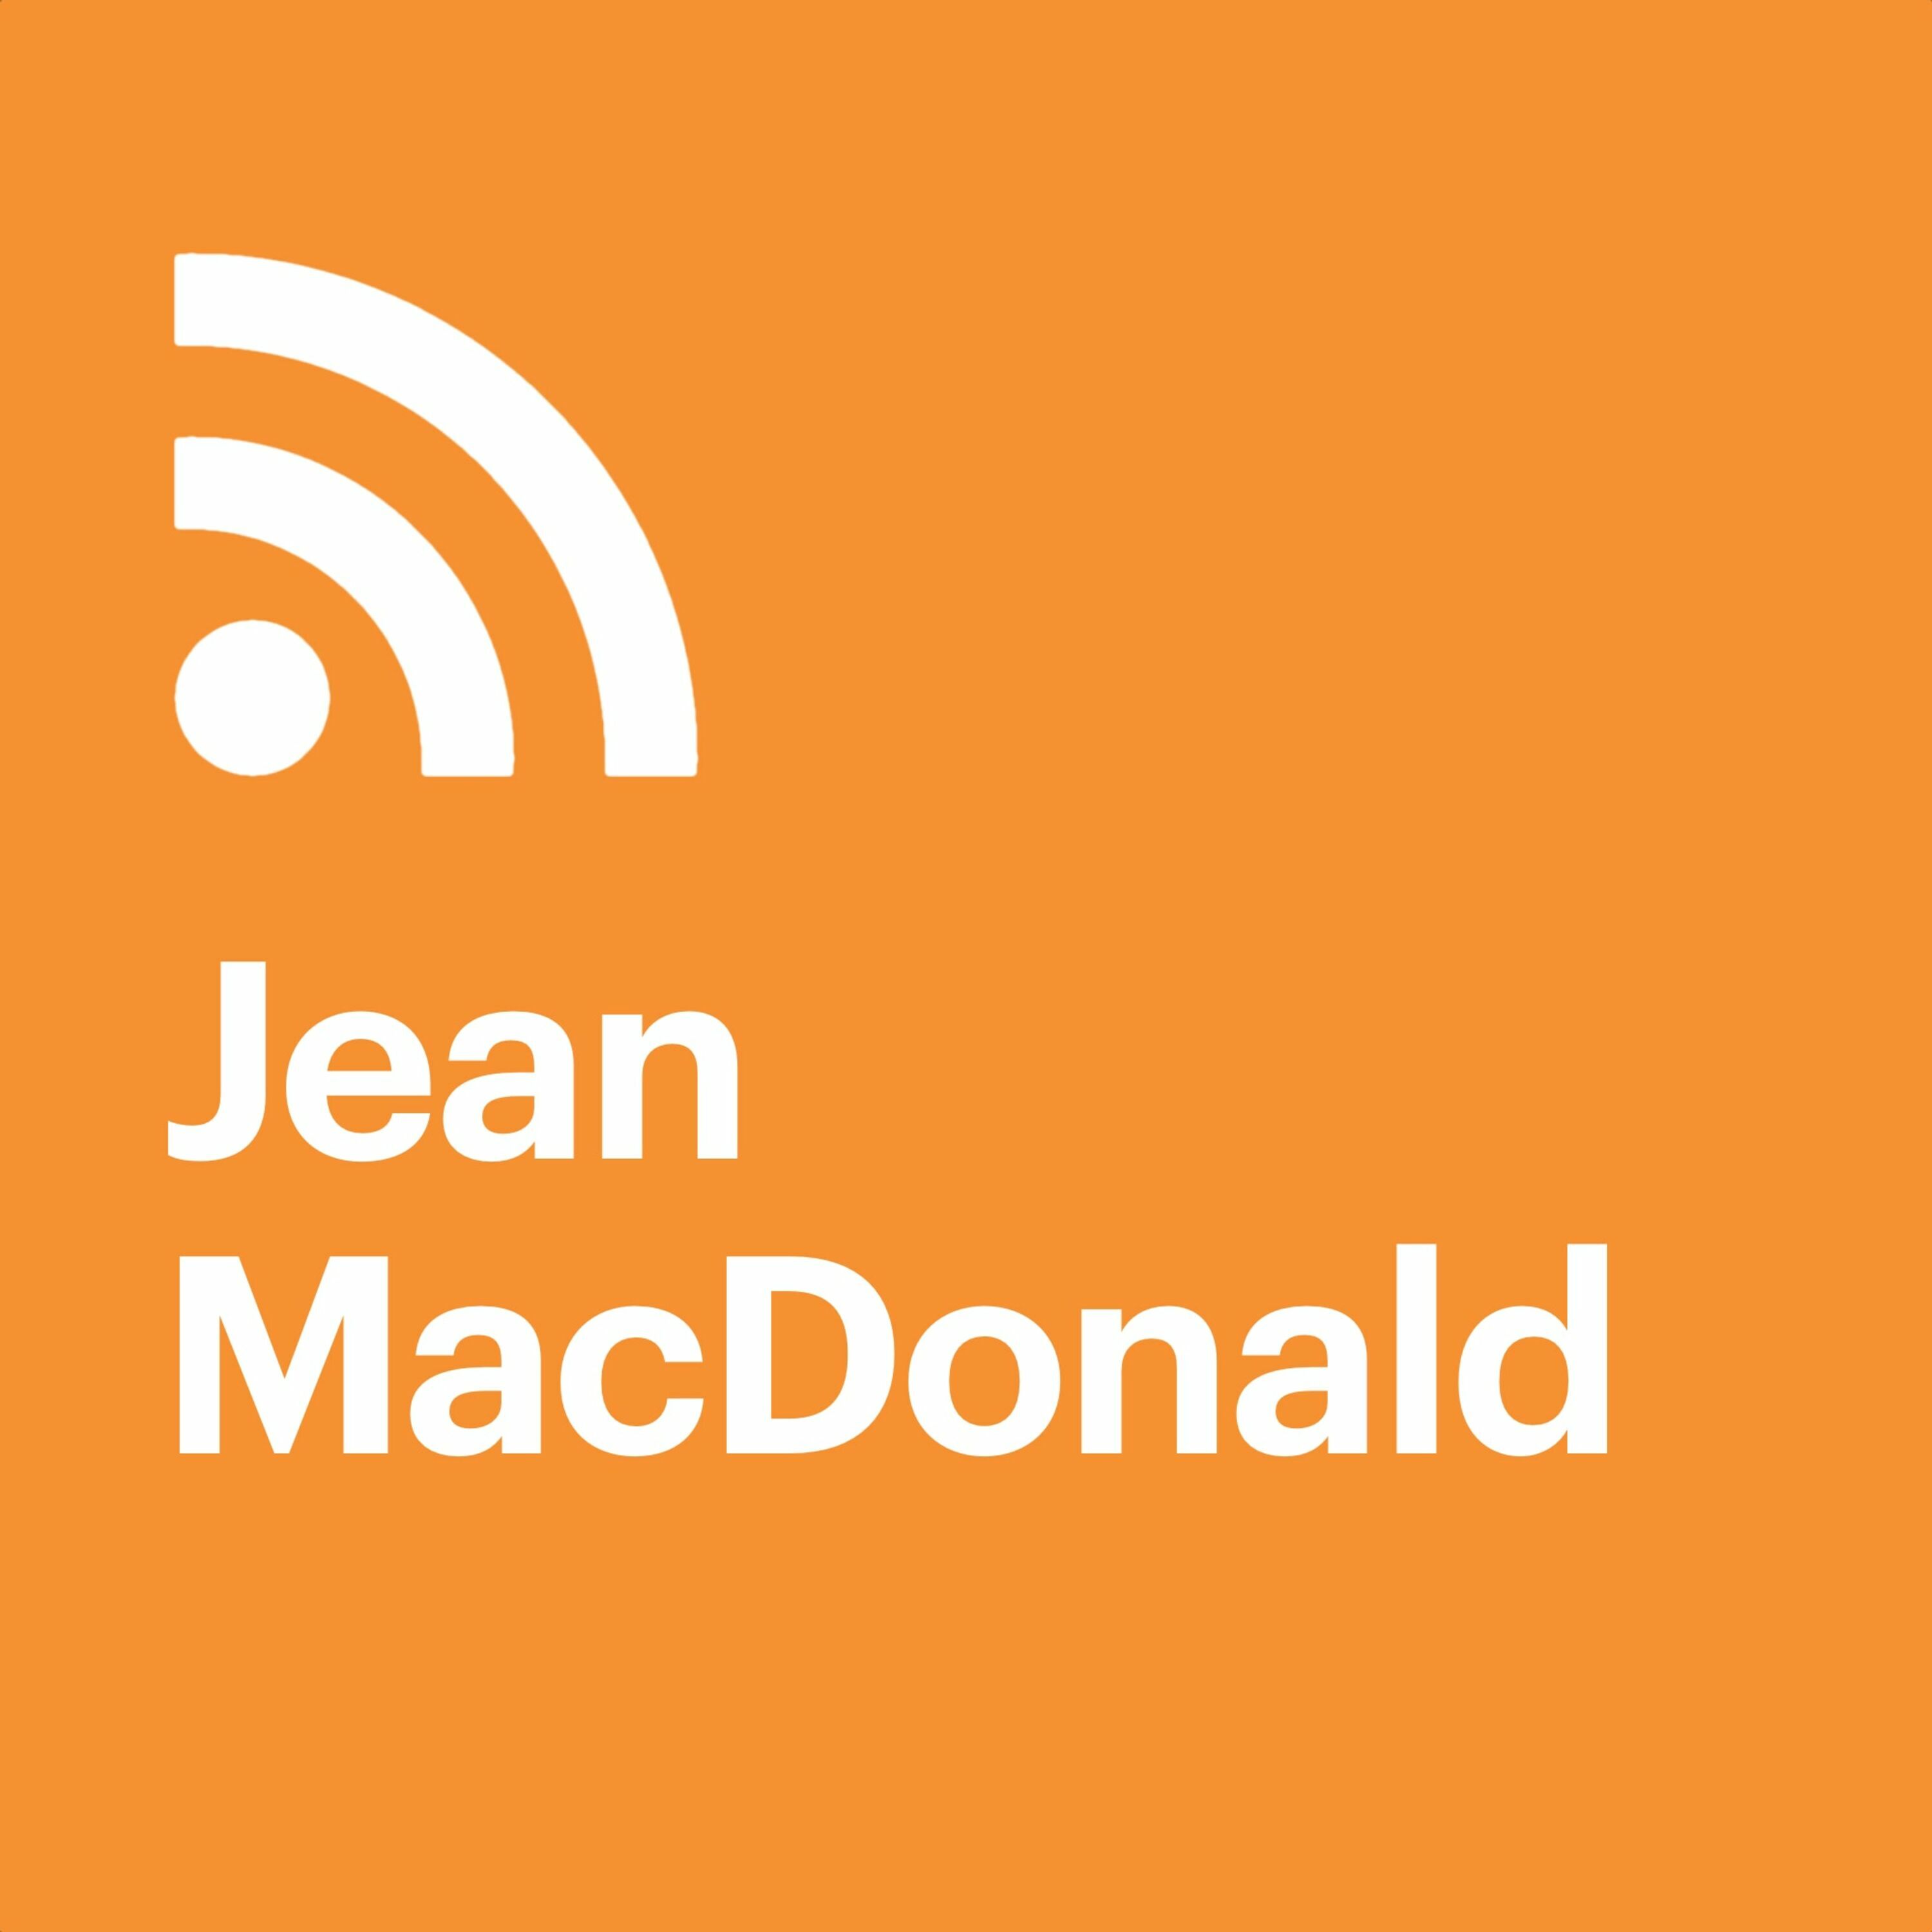 Jean MacDonald